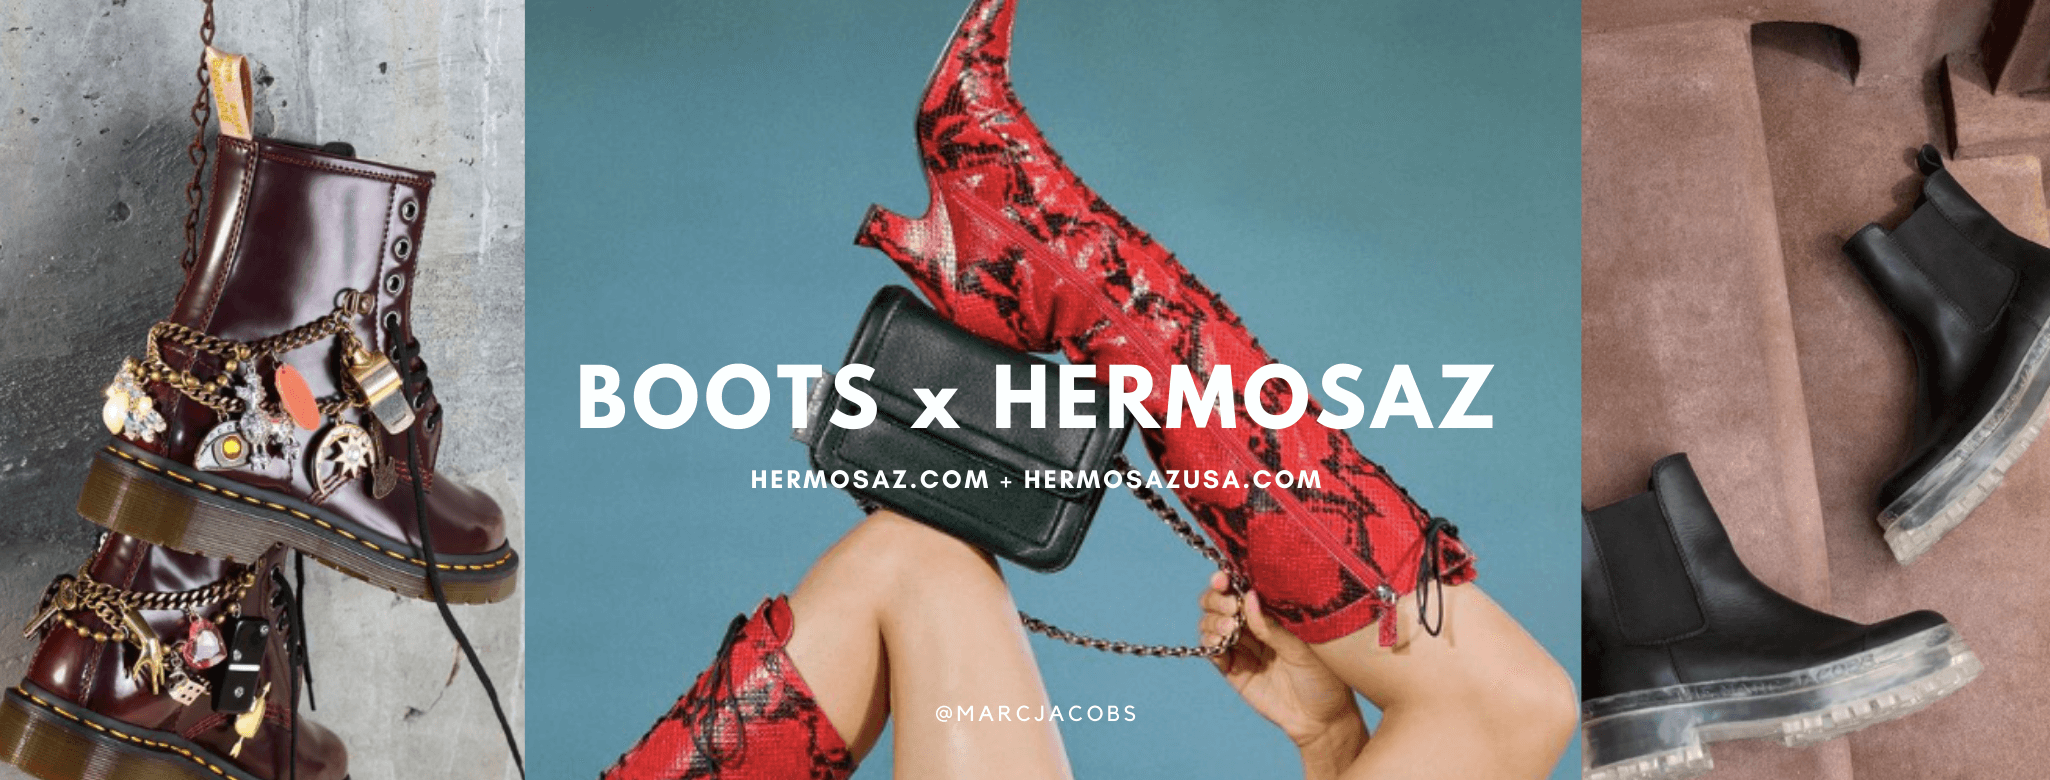 Boots x Hermosaz